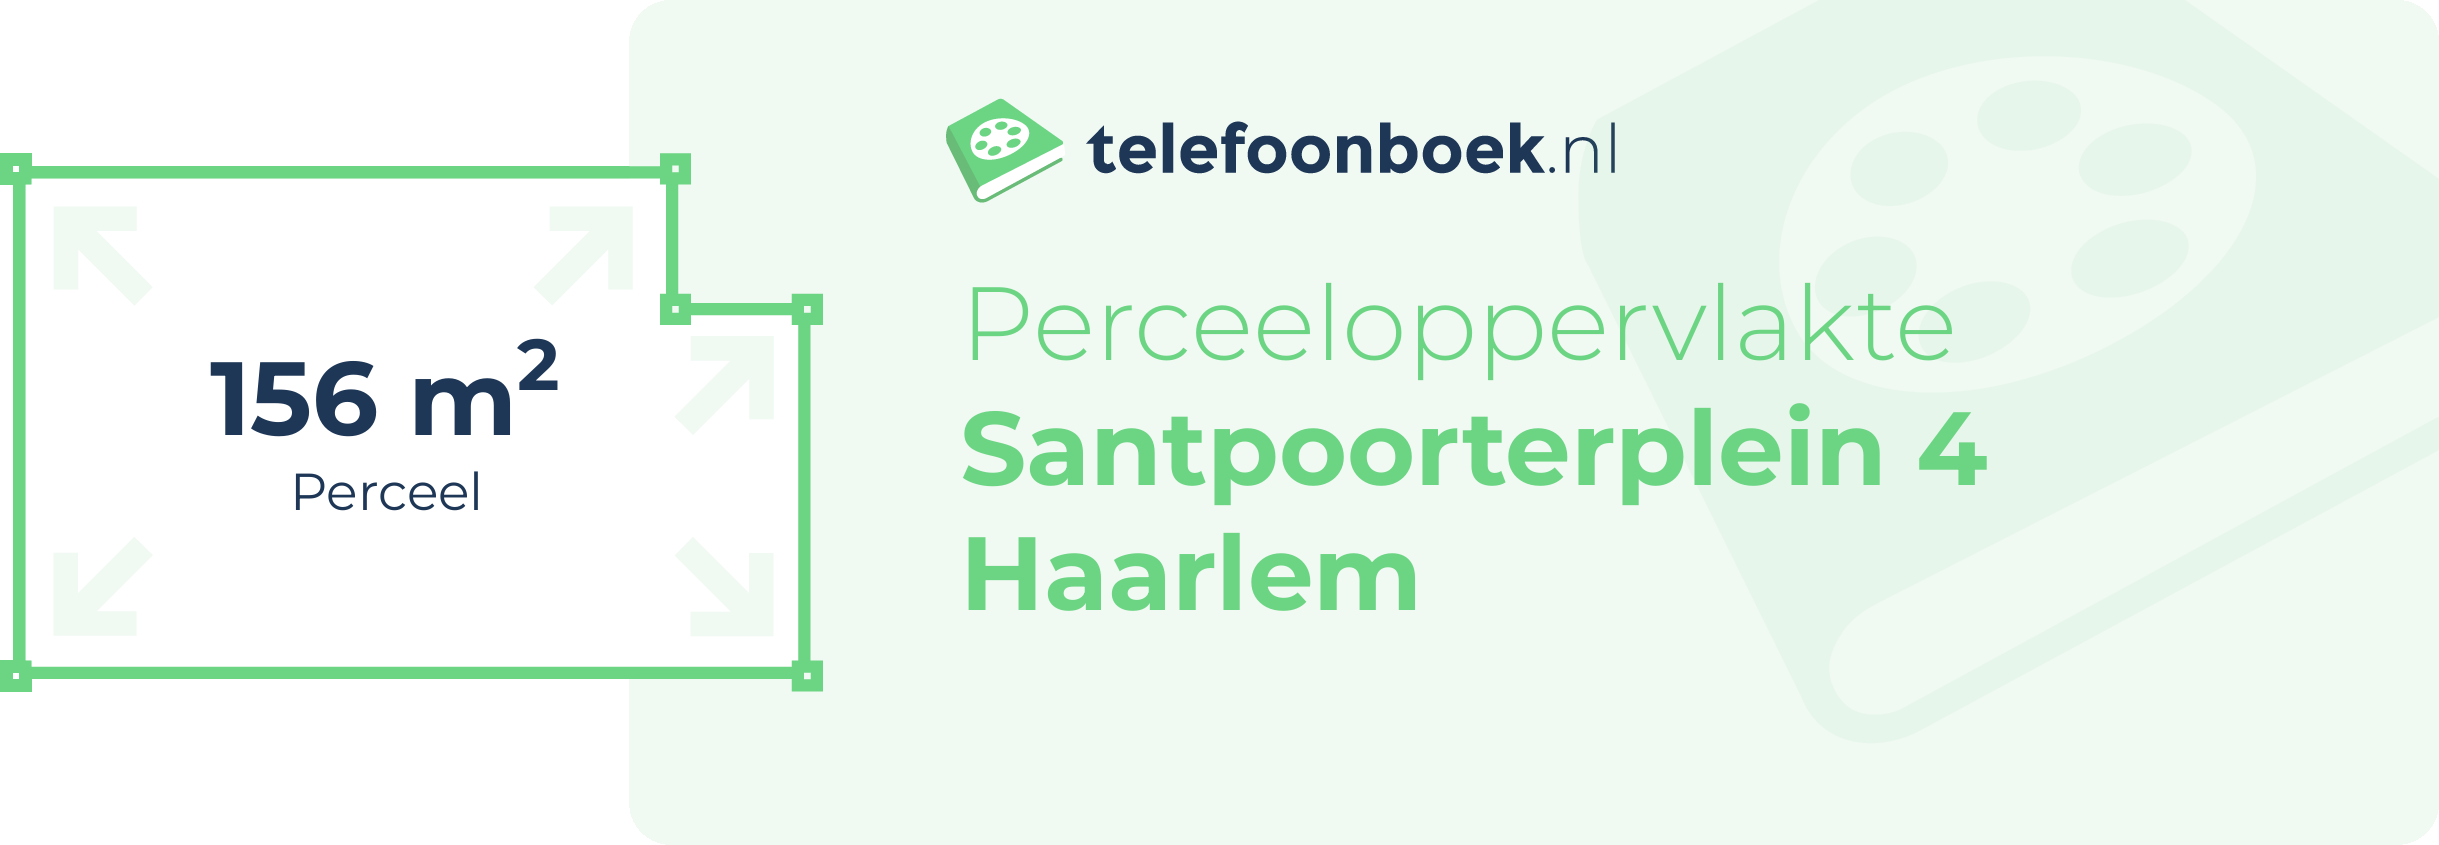 Perceeloppervlakte Santpoorterplein 4 Haarlem